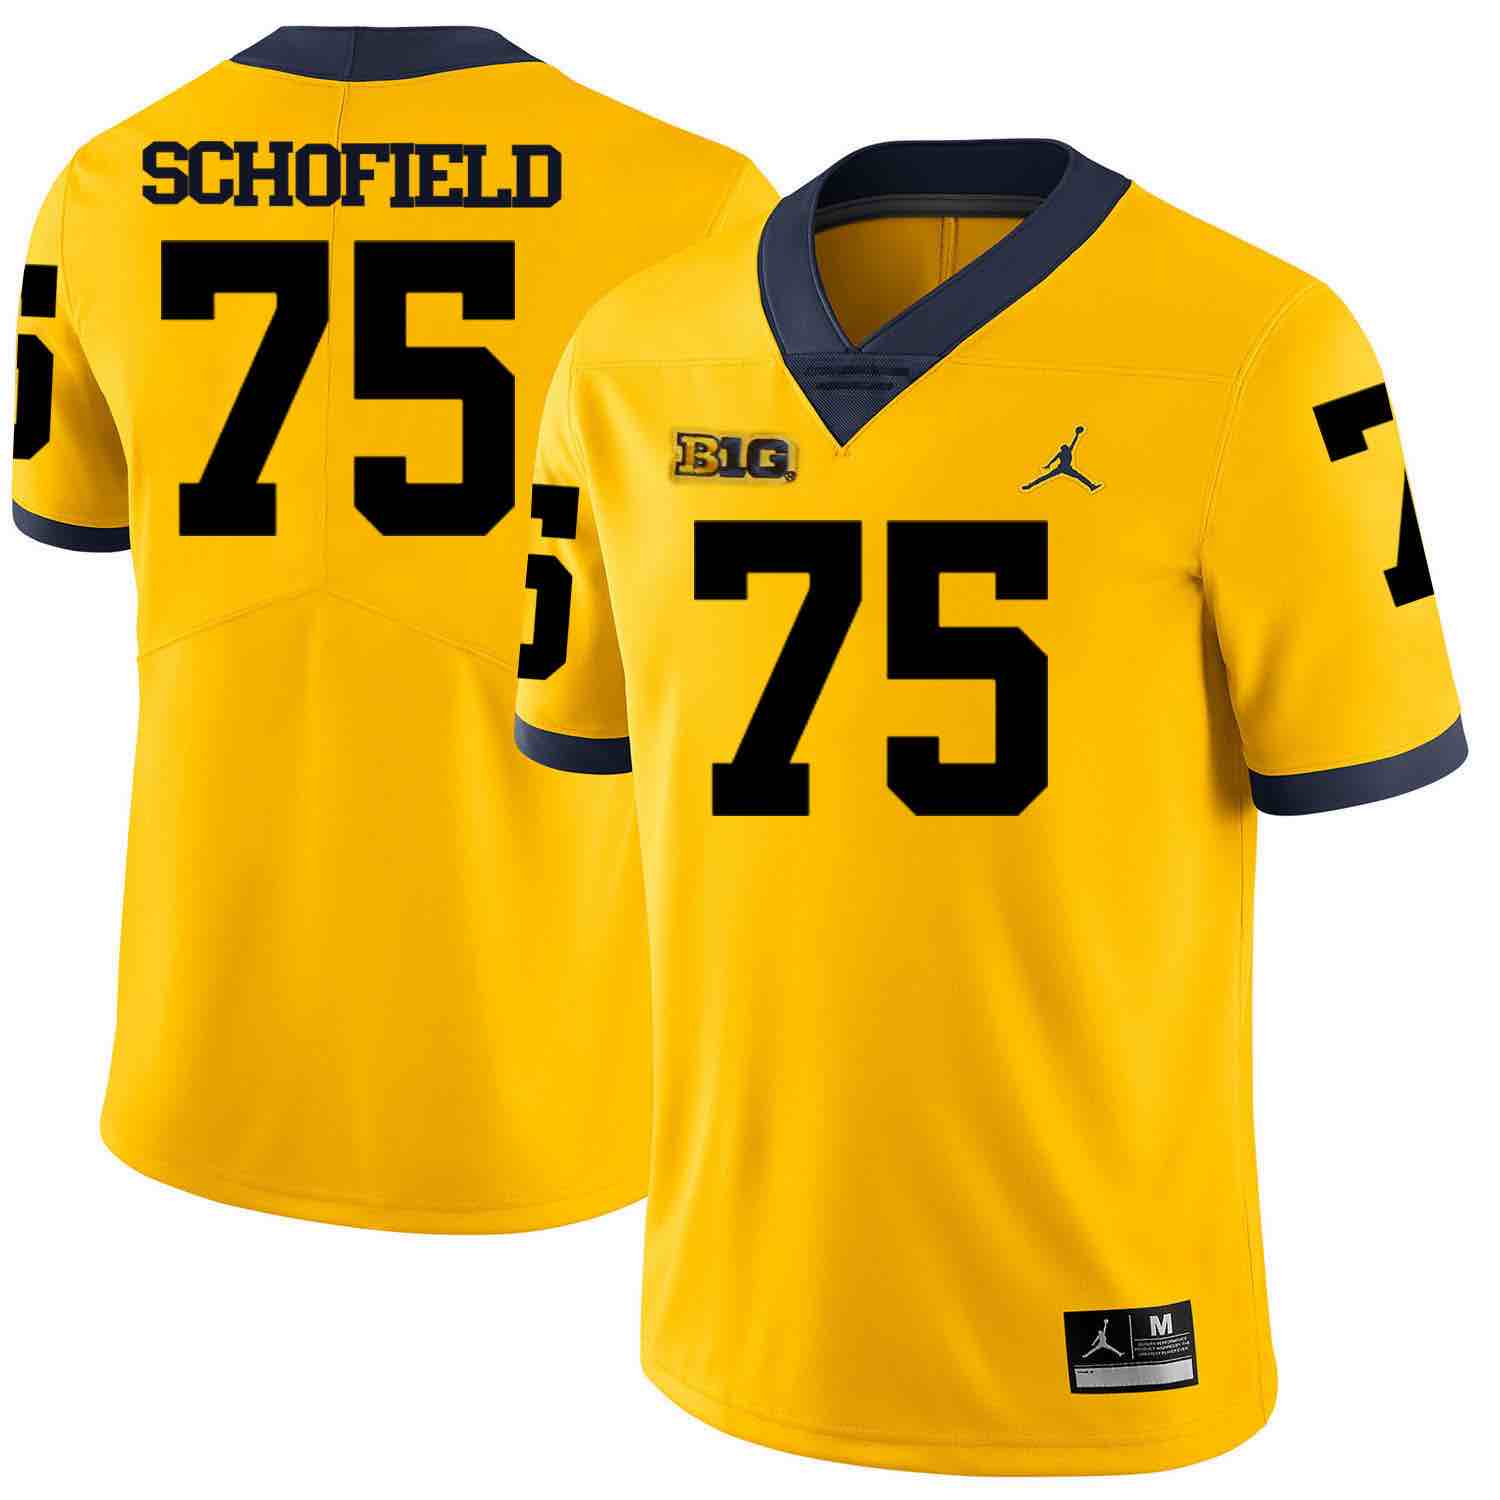 NCAA Michigan Wolverines #75 Schofield Yellow Football Jersey